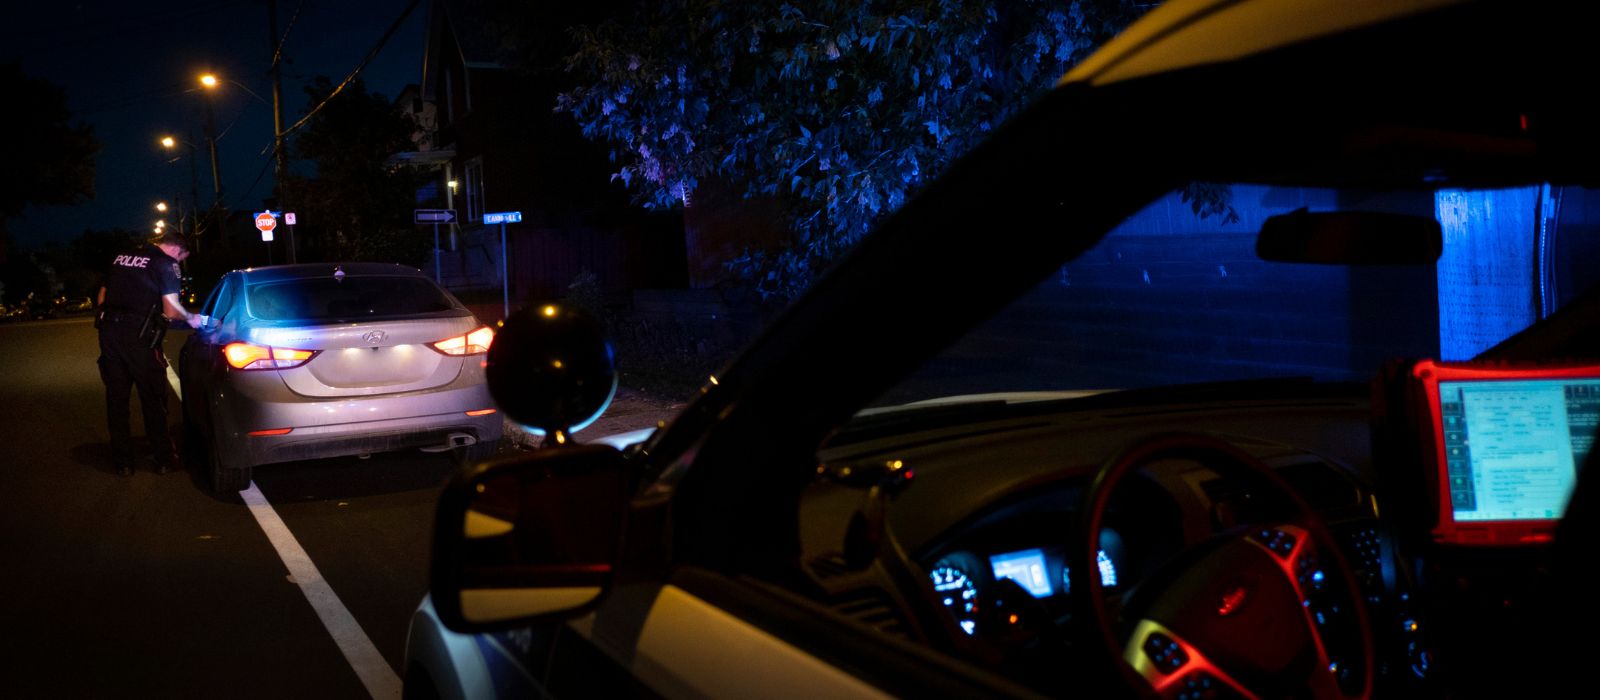 Ottawa Police member conducting a traffic stop at night.